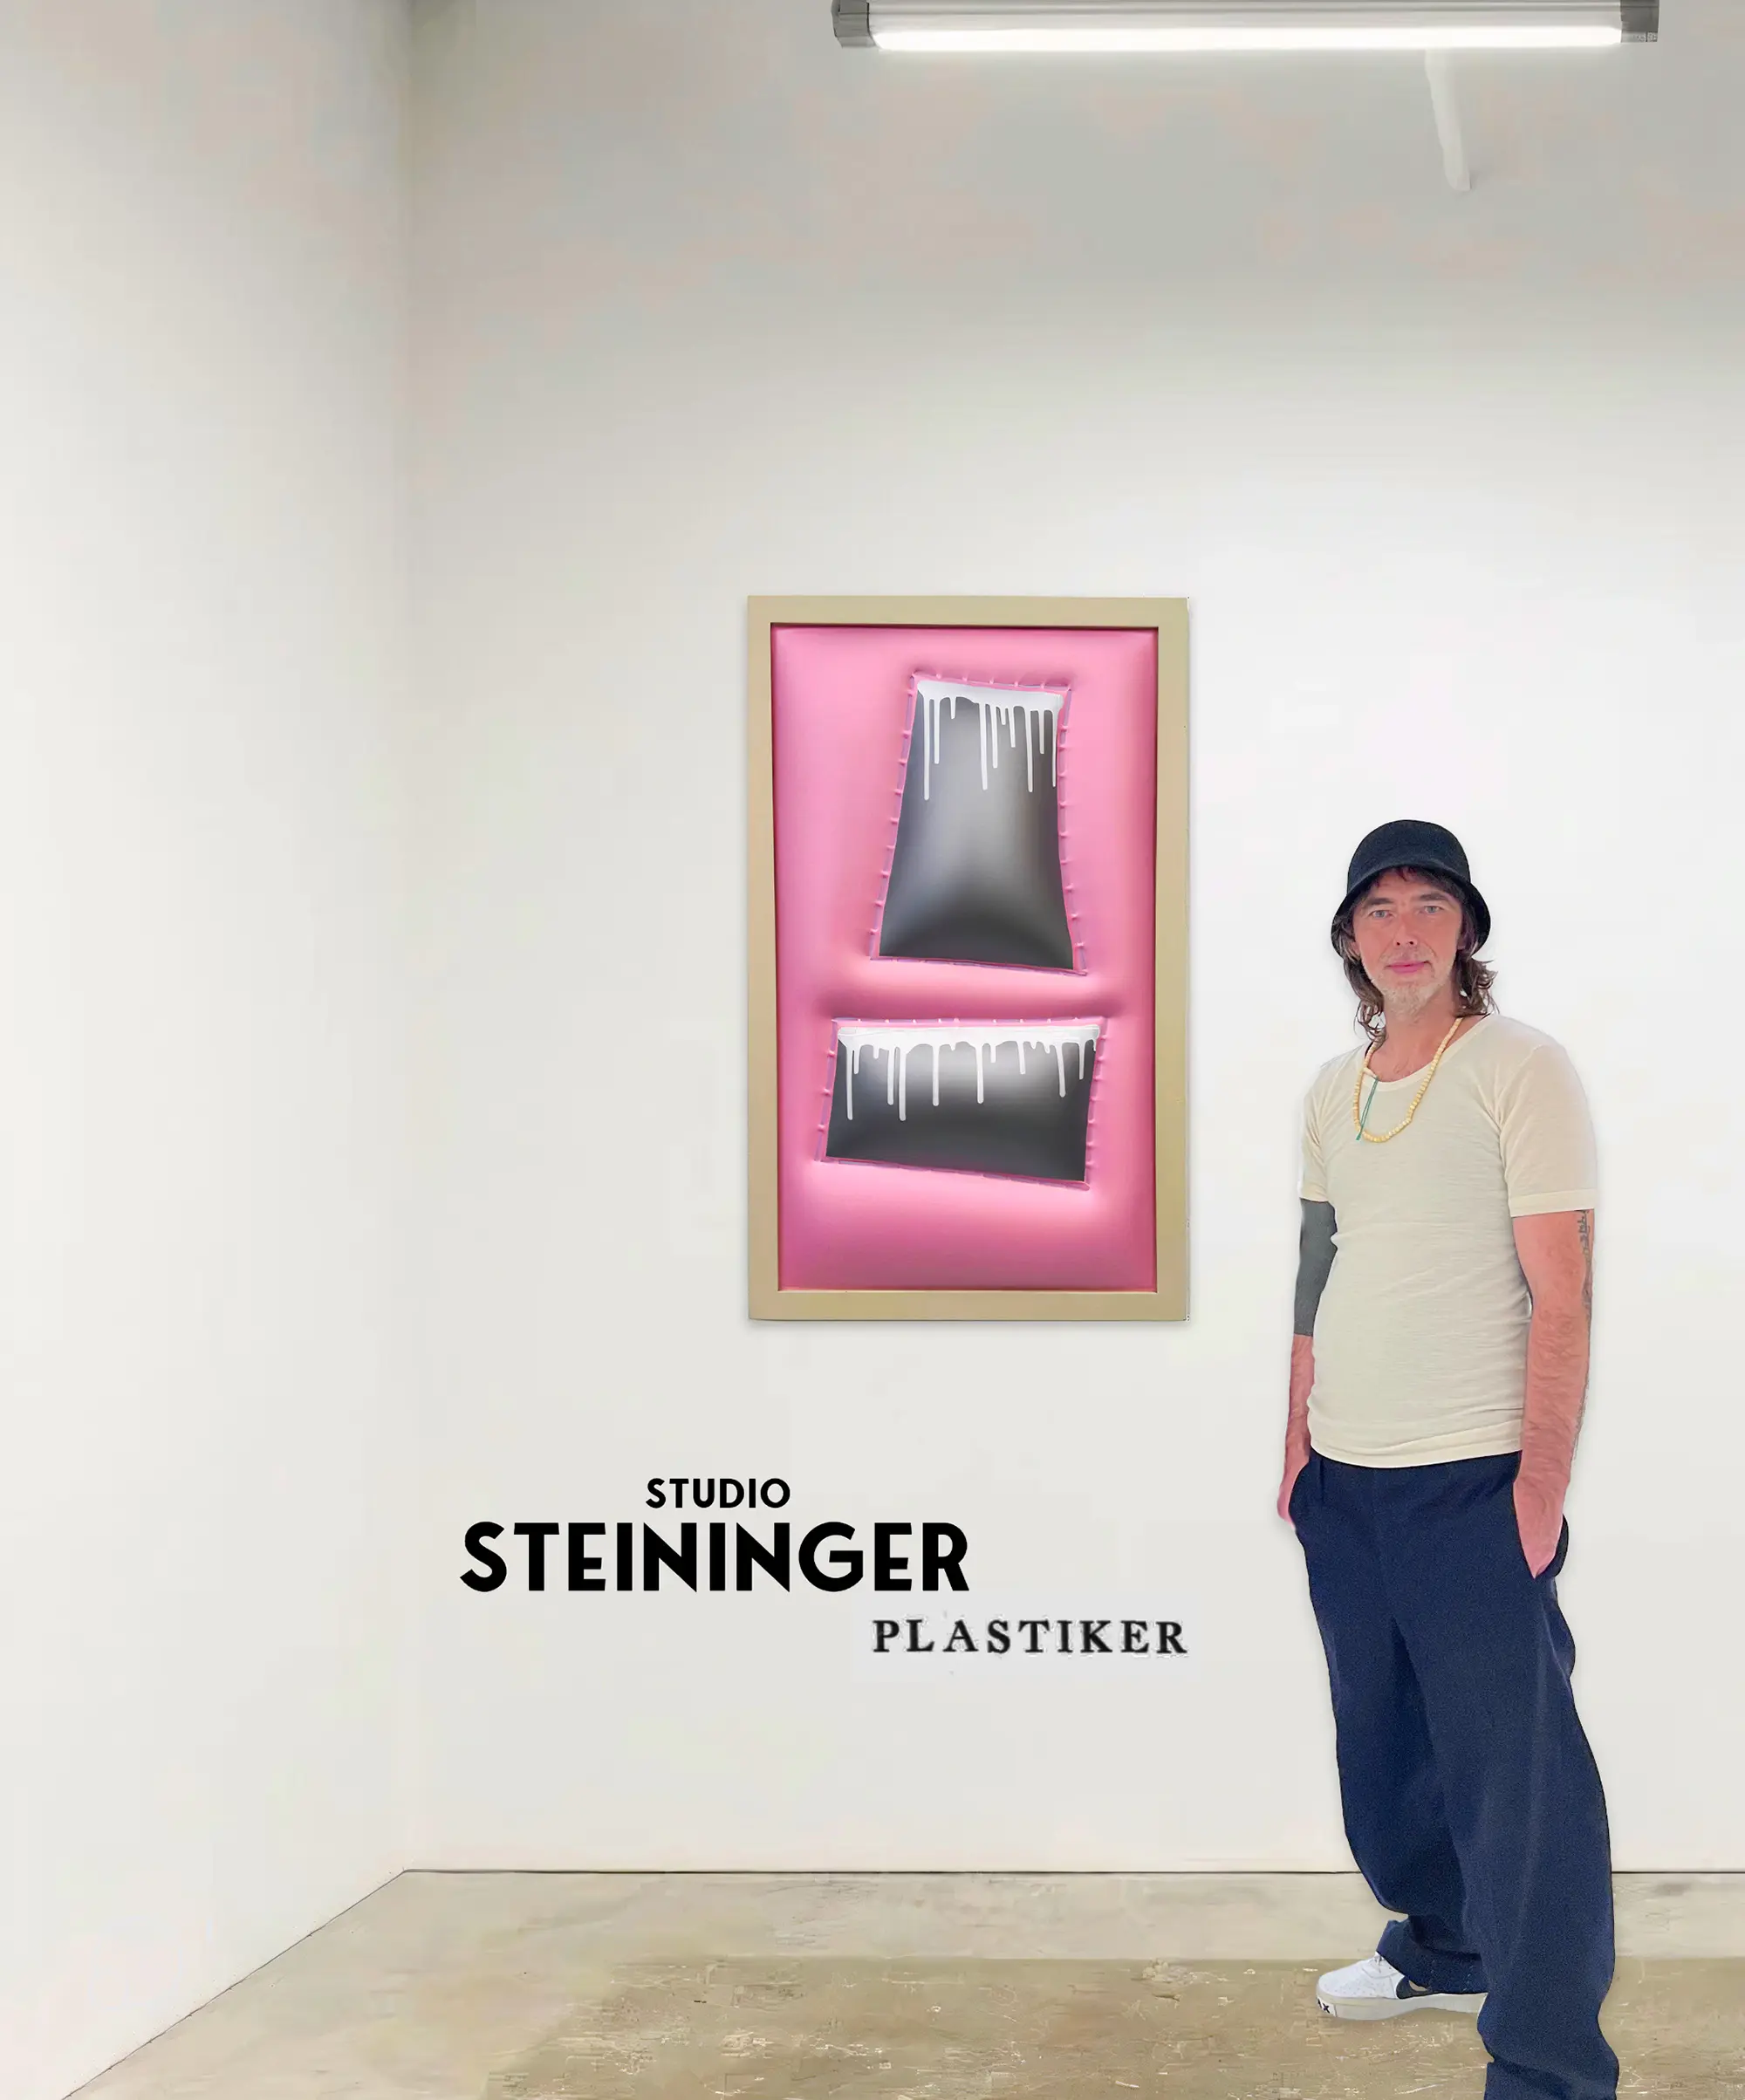 johannes steininger, austrian contemporary promising artist in sculpture and art